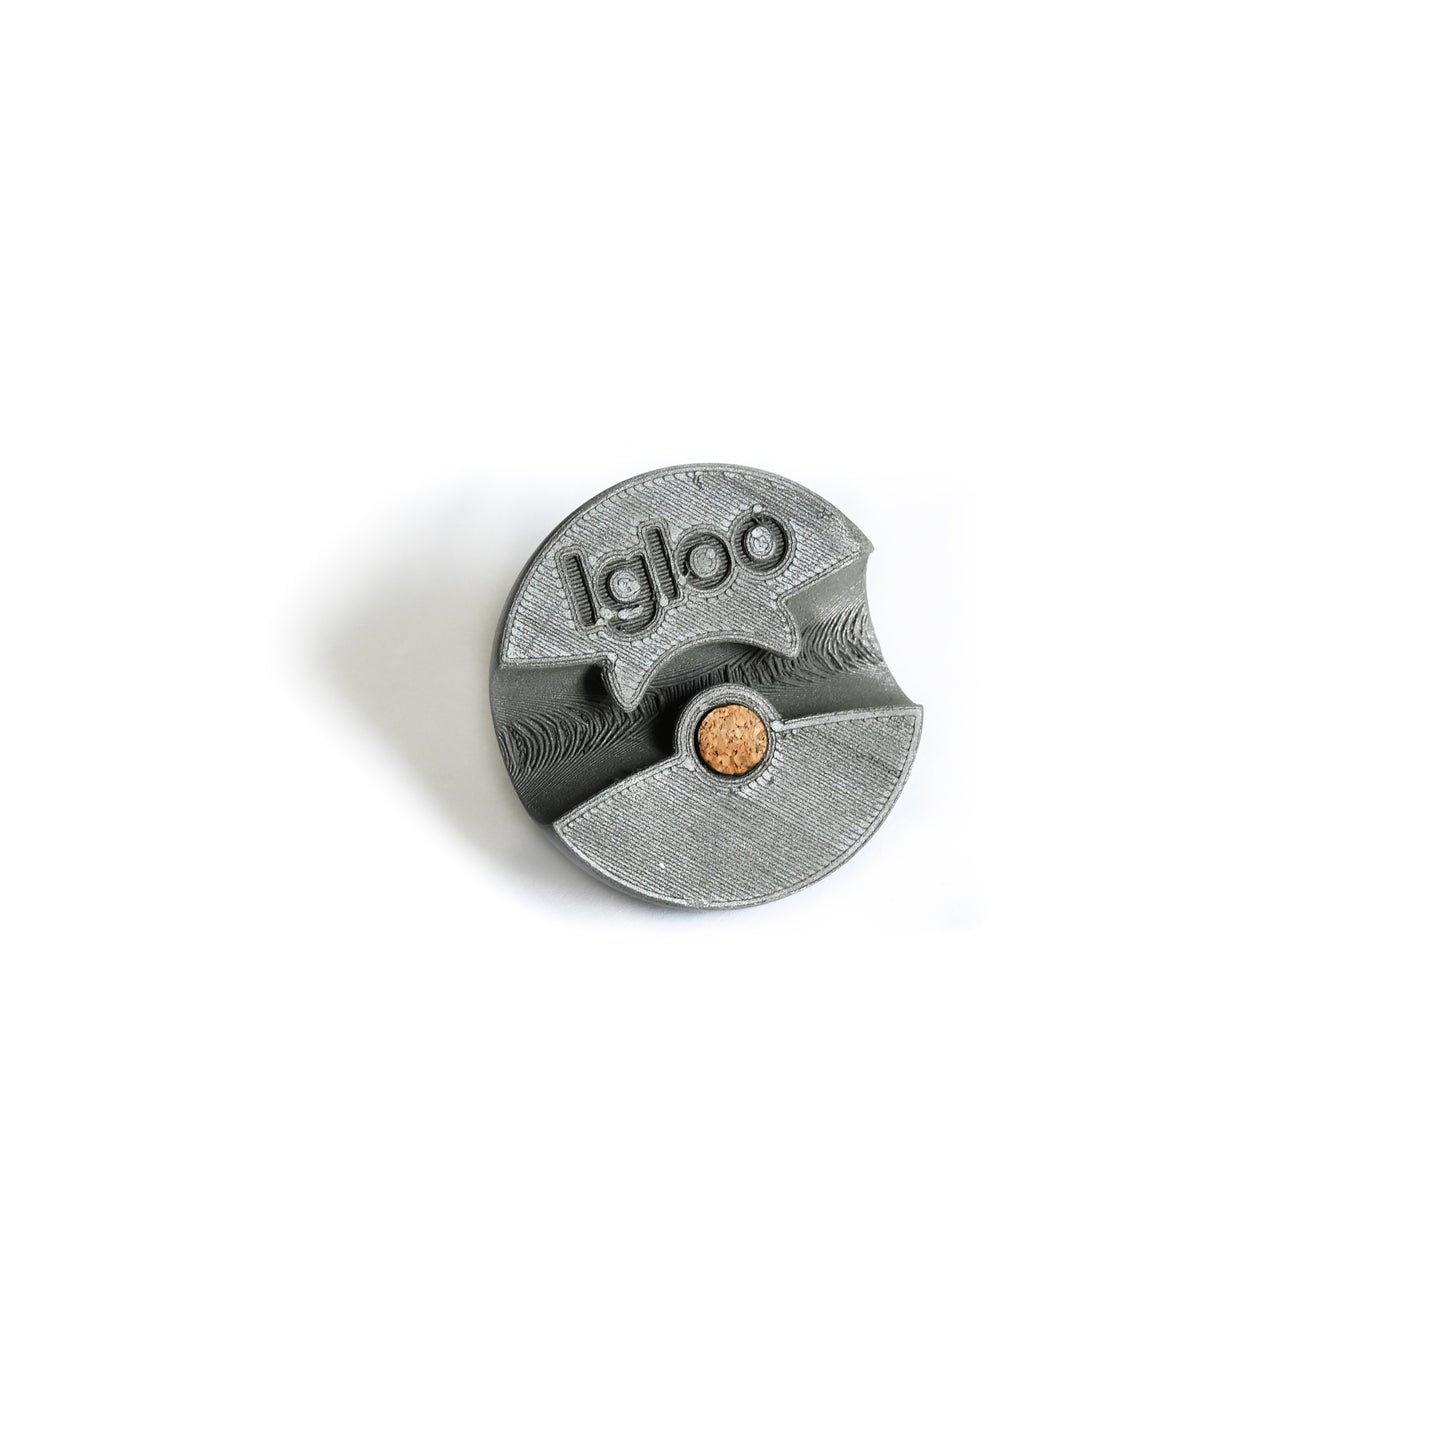 Igloo cut cable holder - Steel